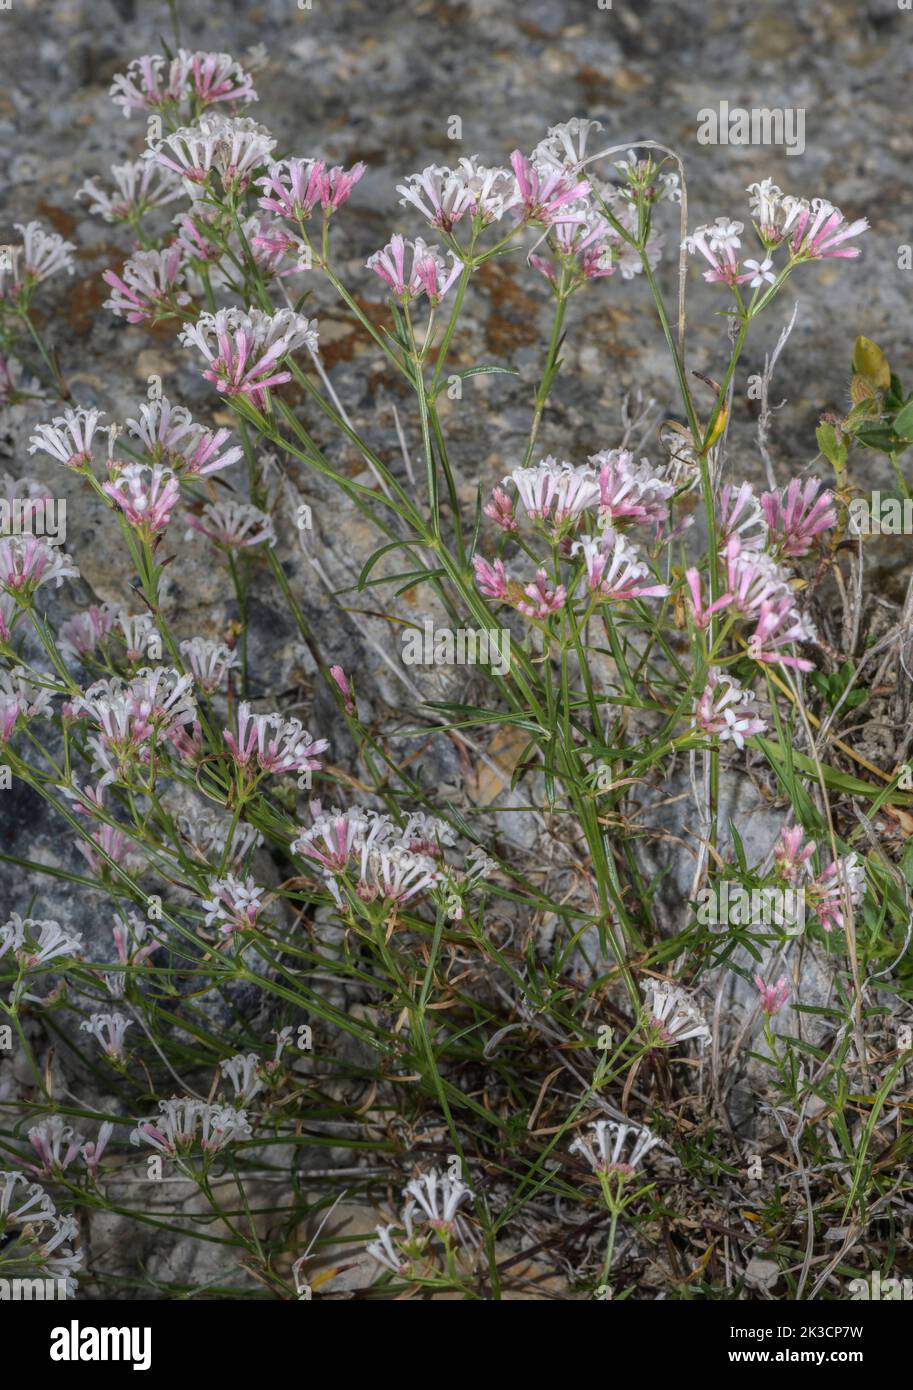 Southern Squinancywort, Asperula aristata, in flower on rocky limestone outcrop, Italian Alps. Stock Photo